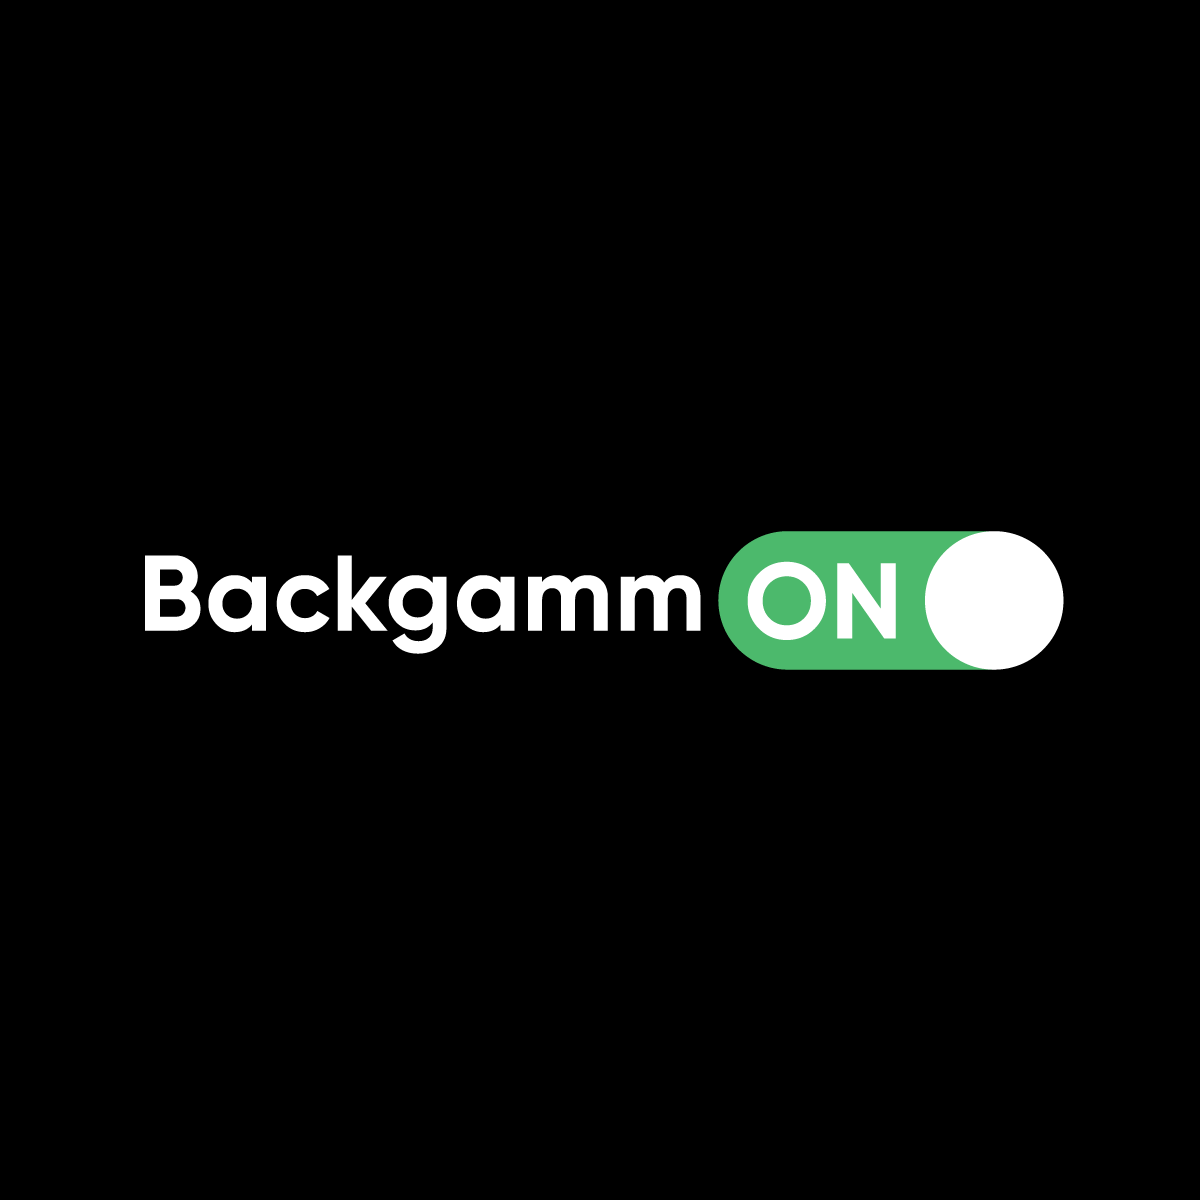 Backgamm ON T-shirt - Backgammon Galaxy T-shirt